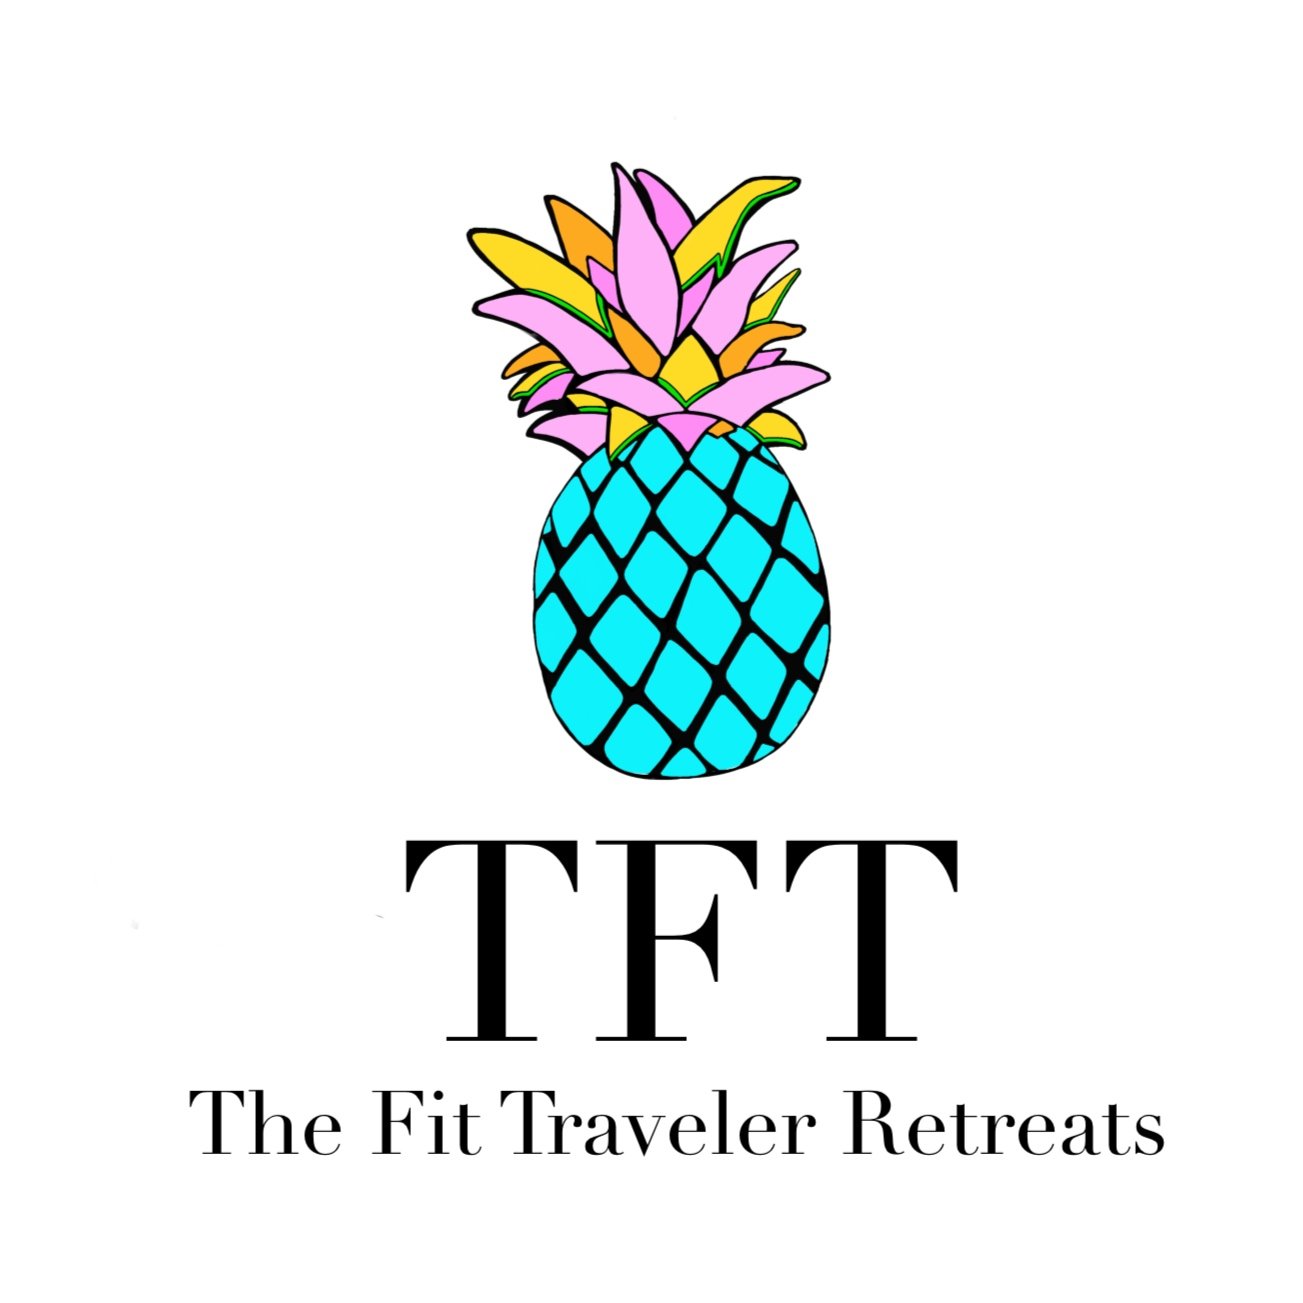 The Fit Traveler Retreats